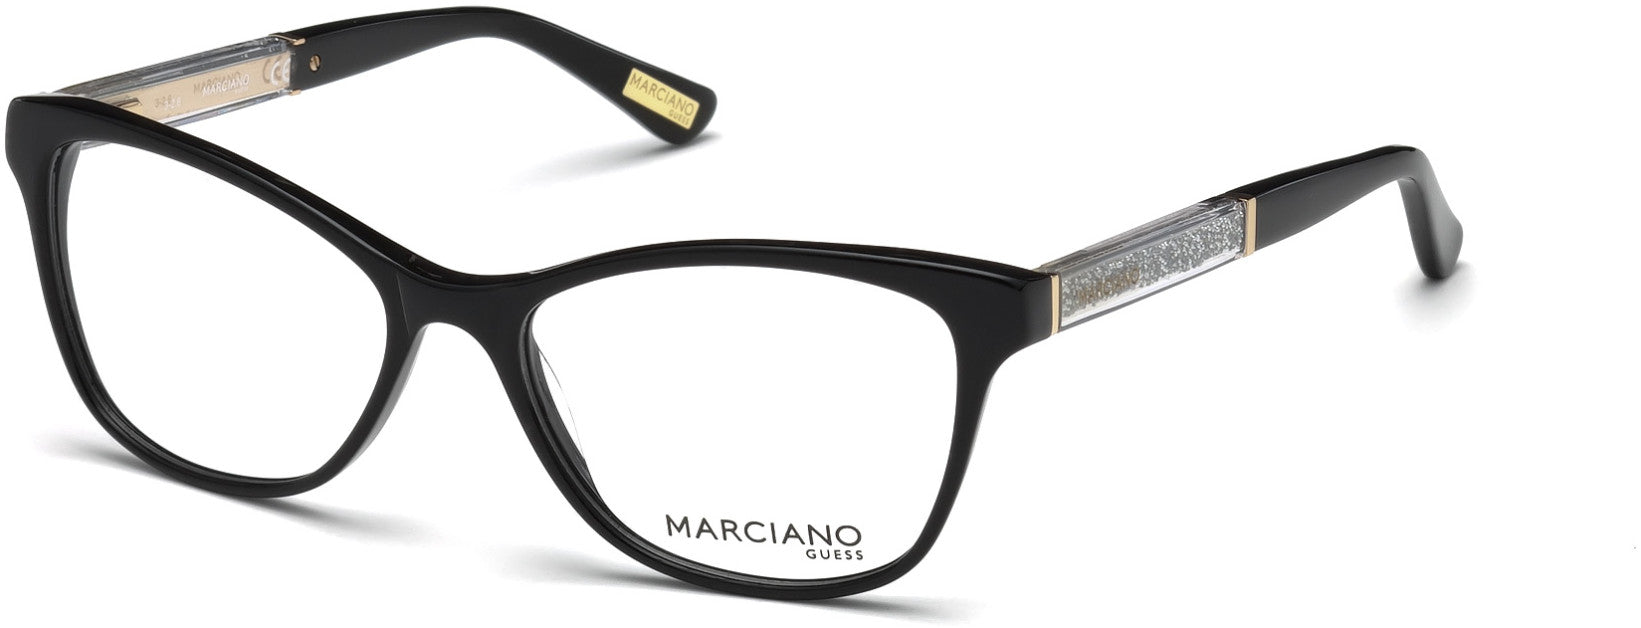 Guess By Marciano GM0313 Geometric Eyeglasses 001-001 - Shiny Black